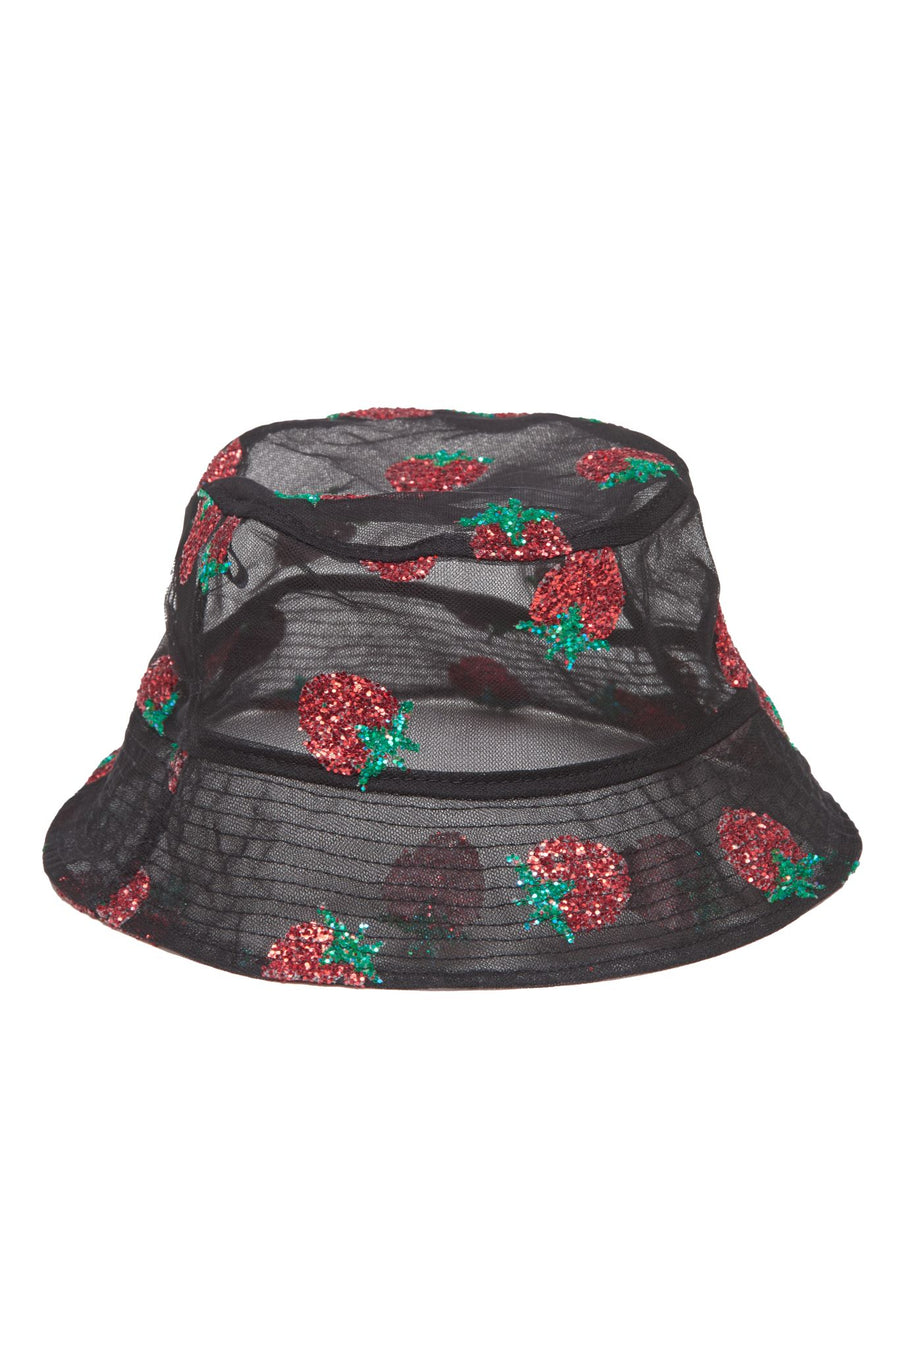 Strawberry Black Bucket Hat